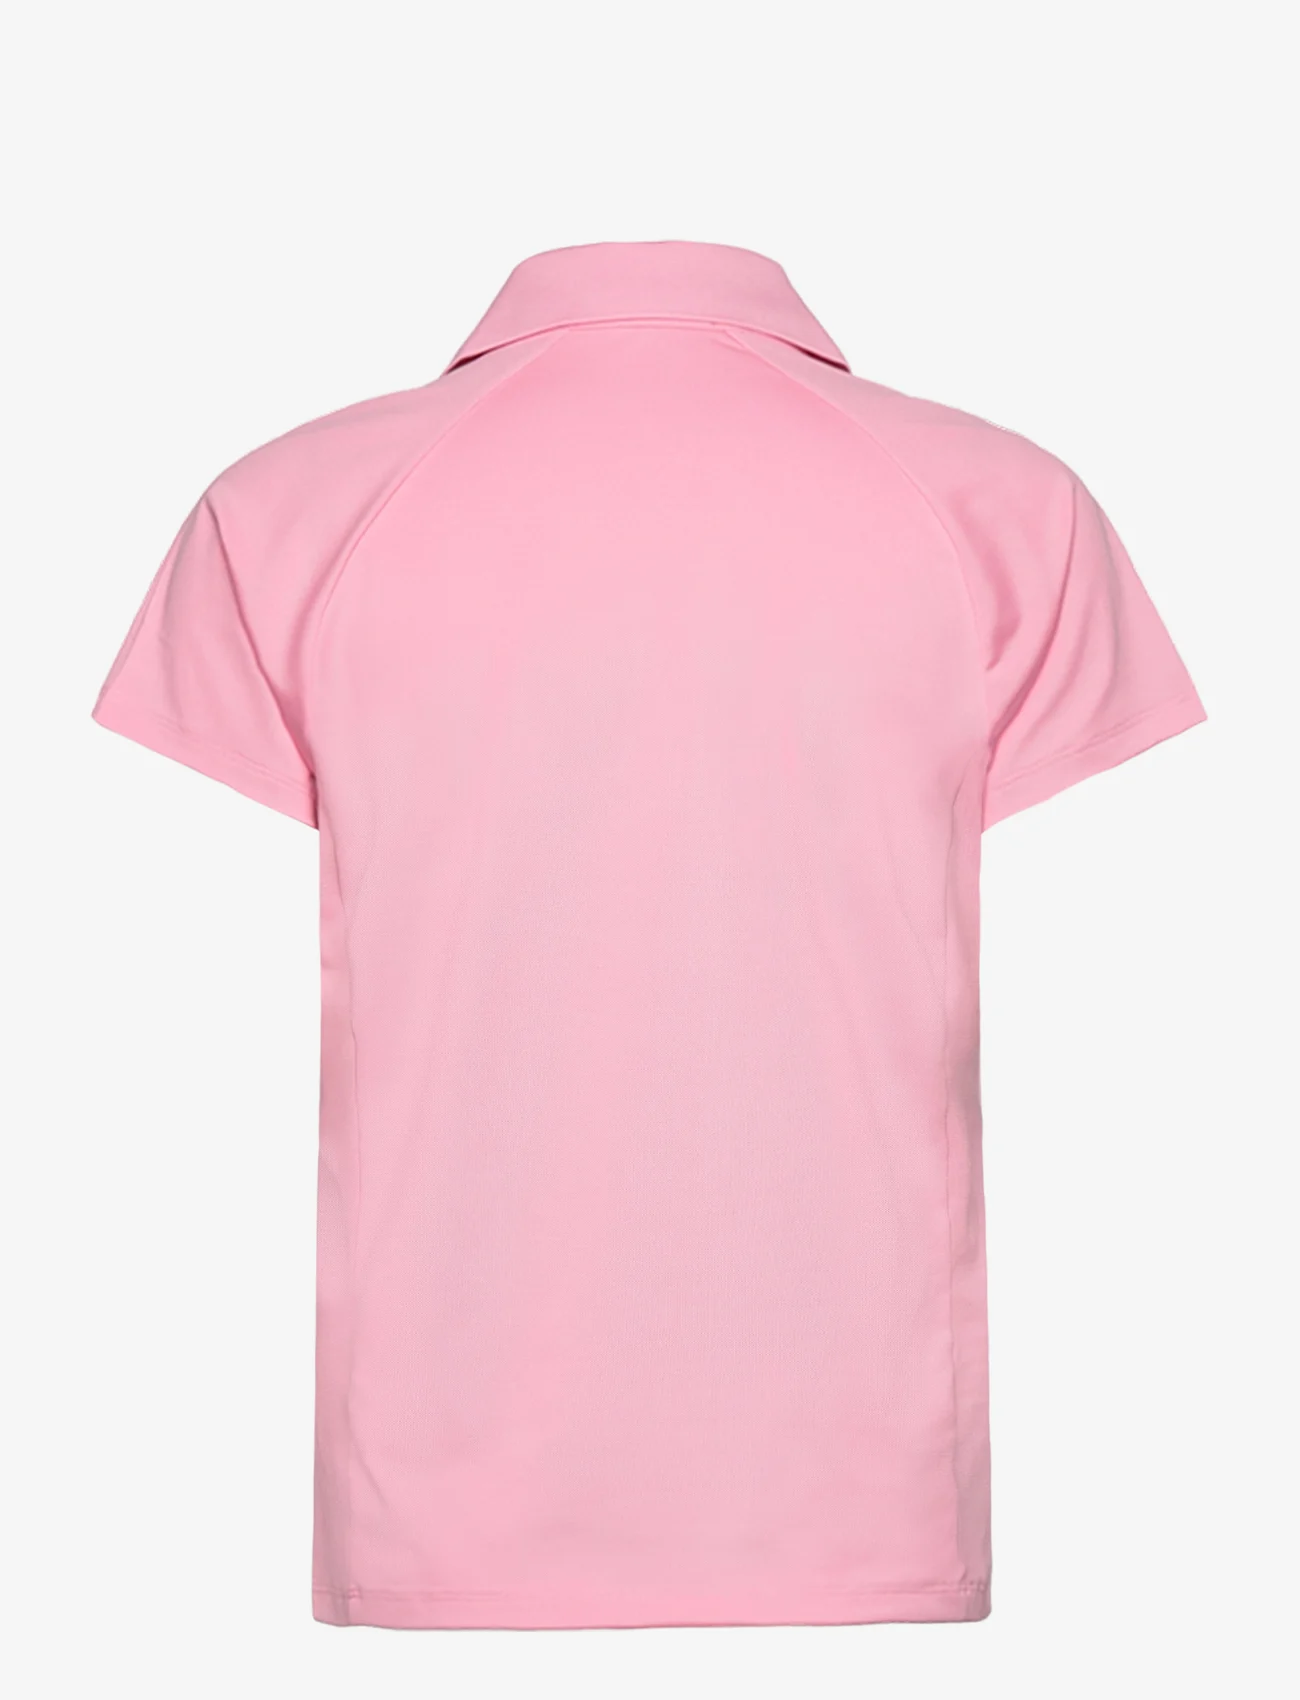 Ralph Lauren Golf - Tailored Fit Mesh Polo Shirt - polo marškinėliai - course pink - 1